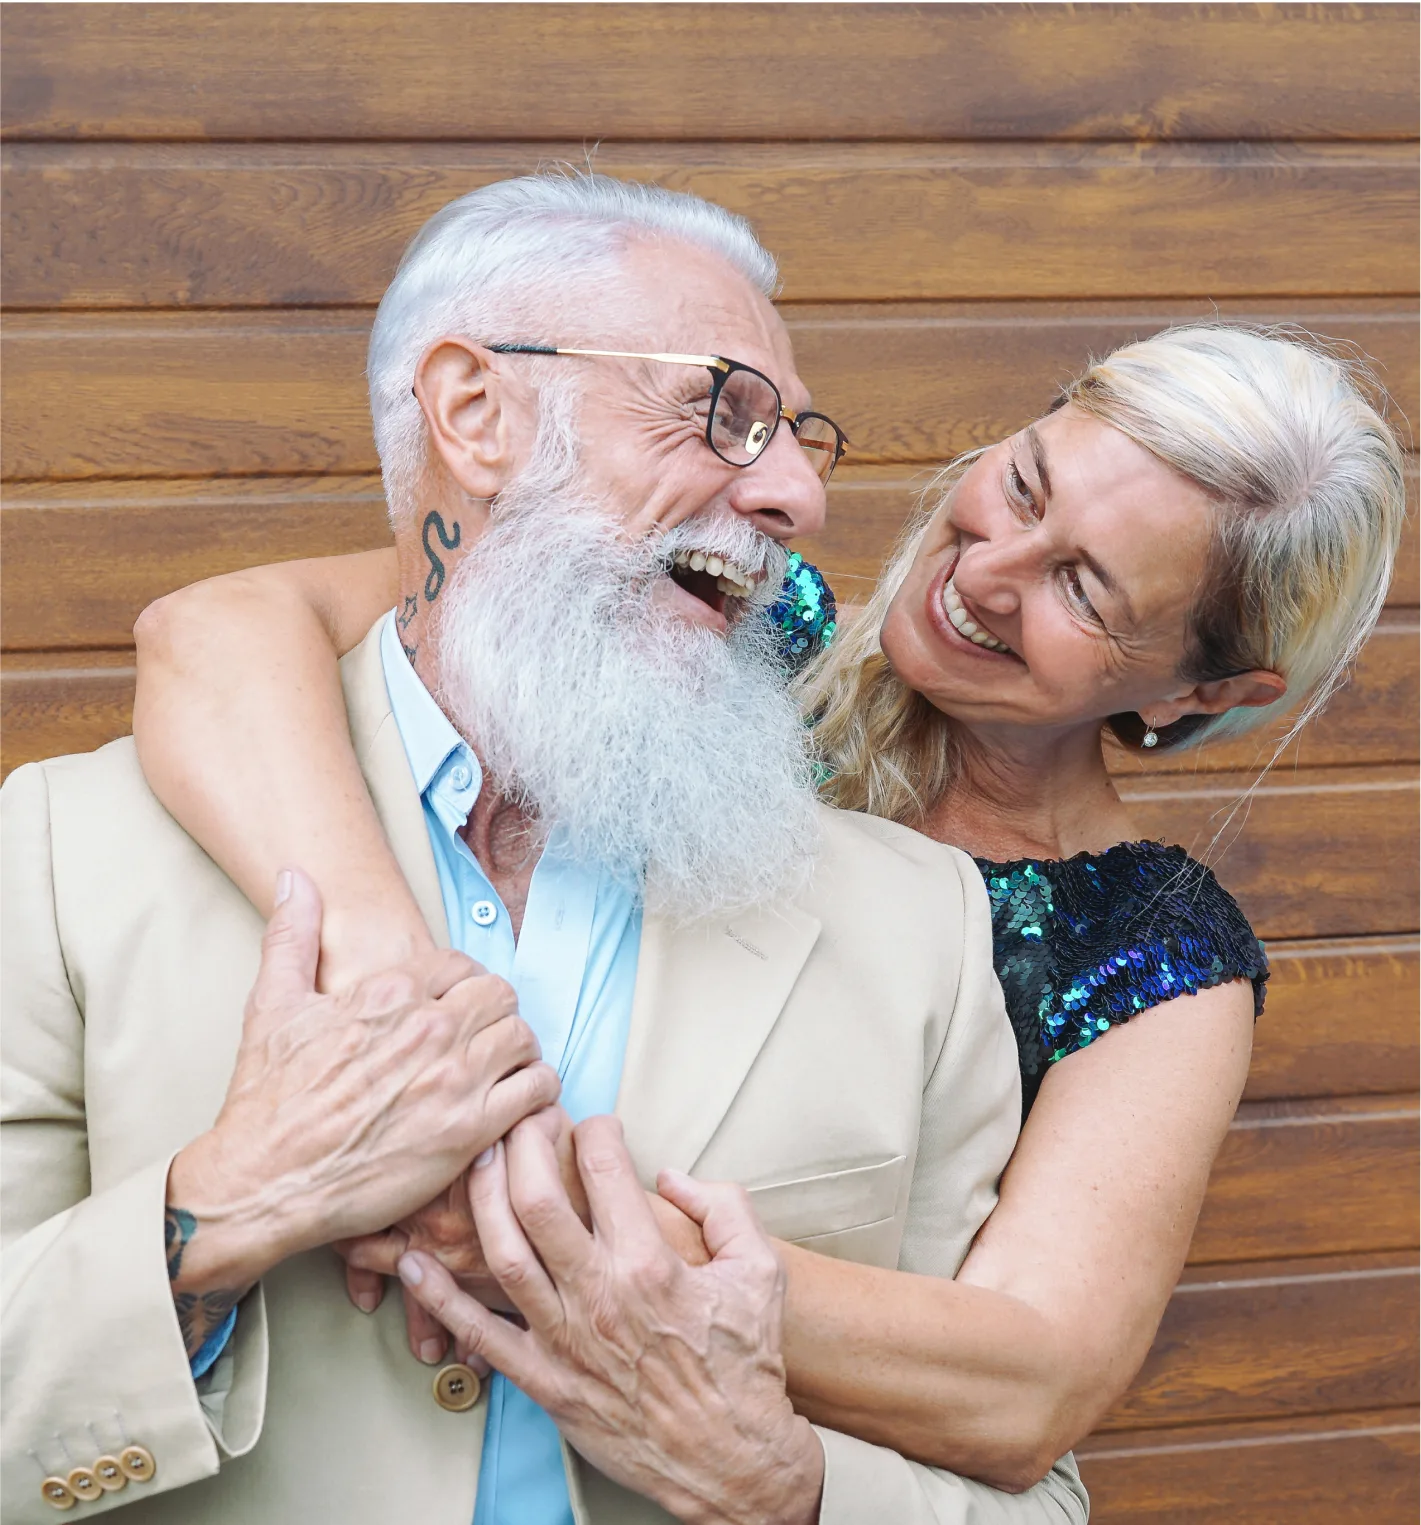 happy-fashion-seniors-couple-embracing-outdoor-2021-12-09-19-22-27-utc